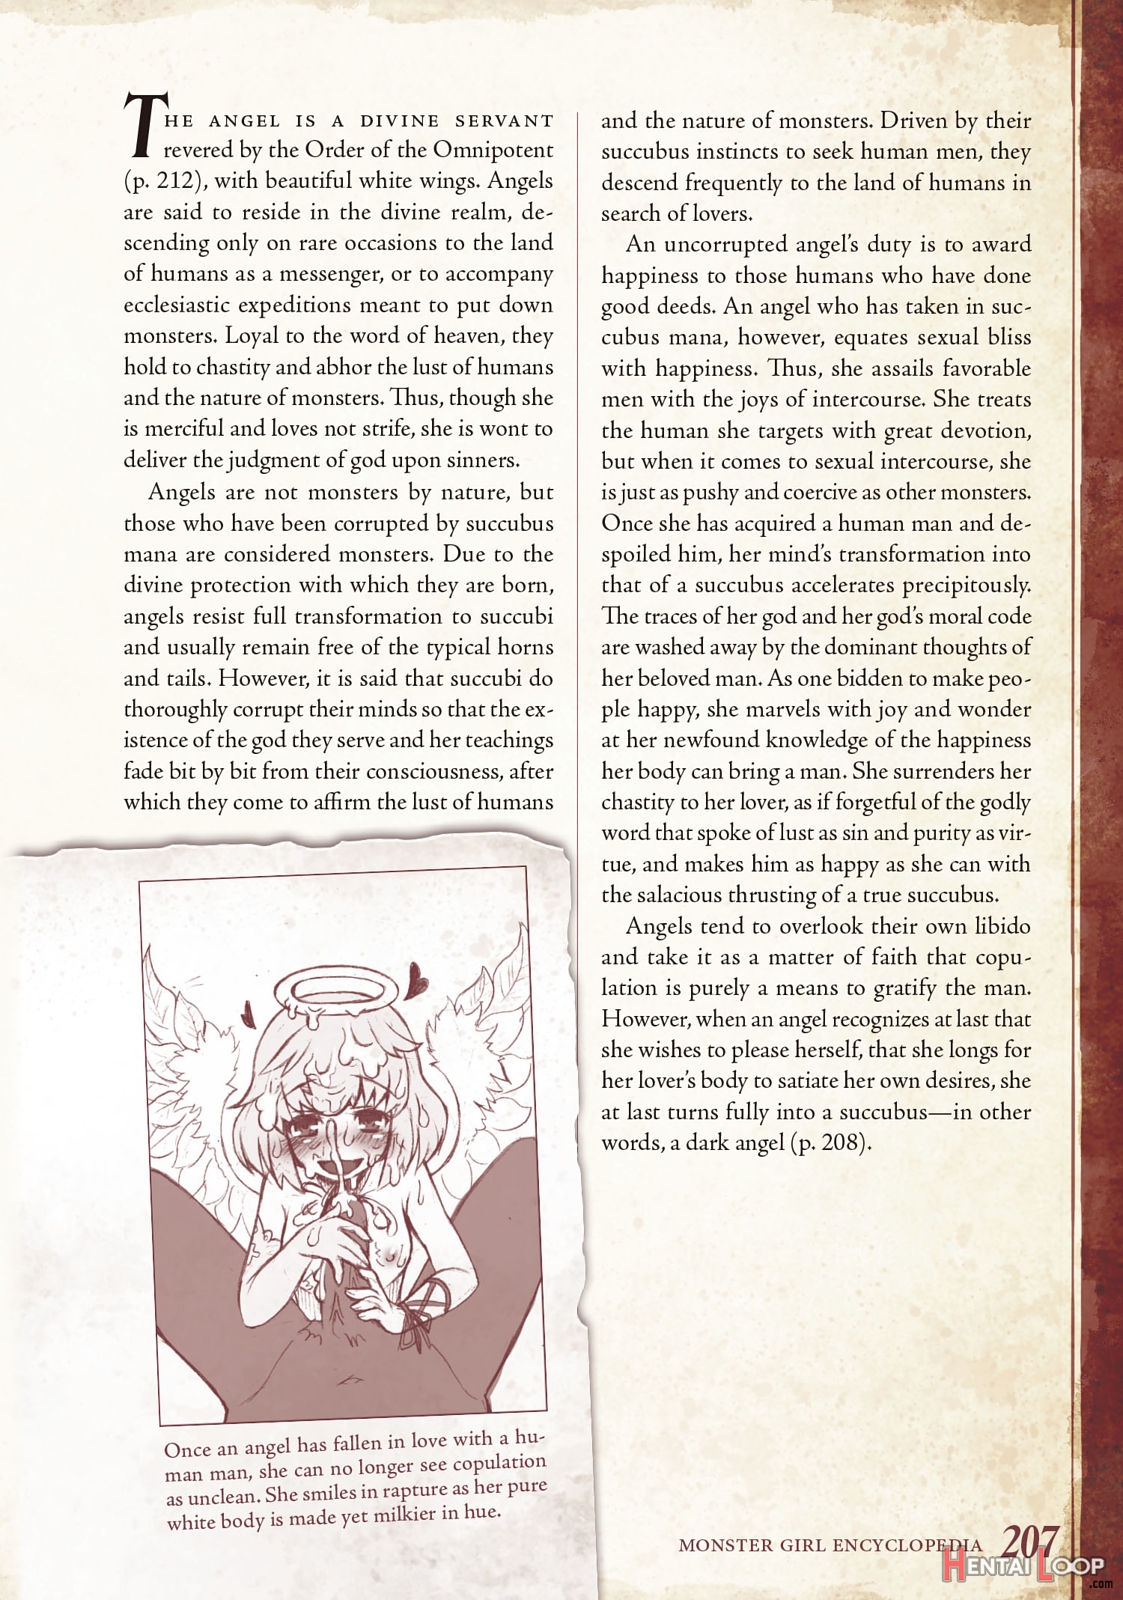 Monster Girl Encyclopedia Vol. 1 page 208